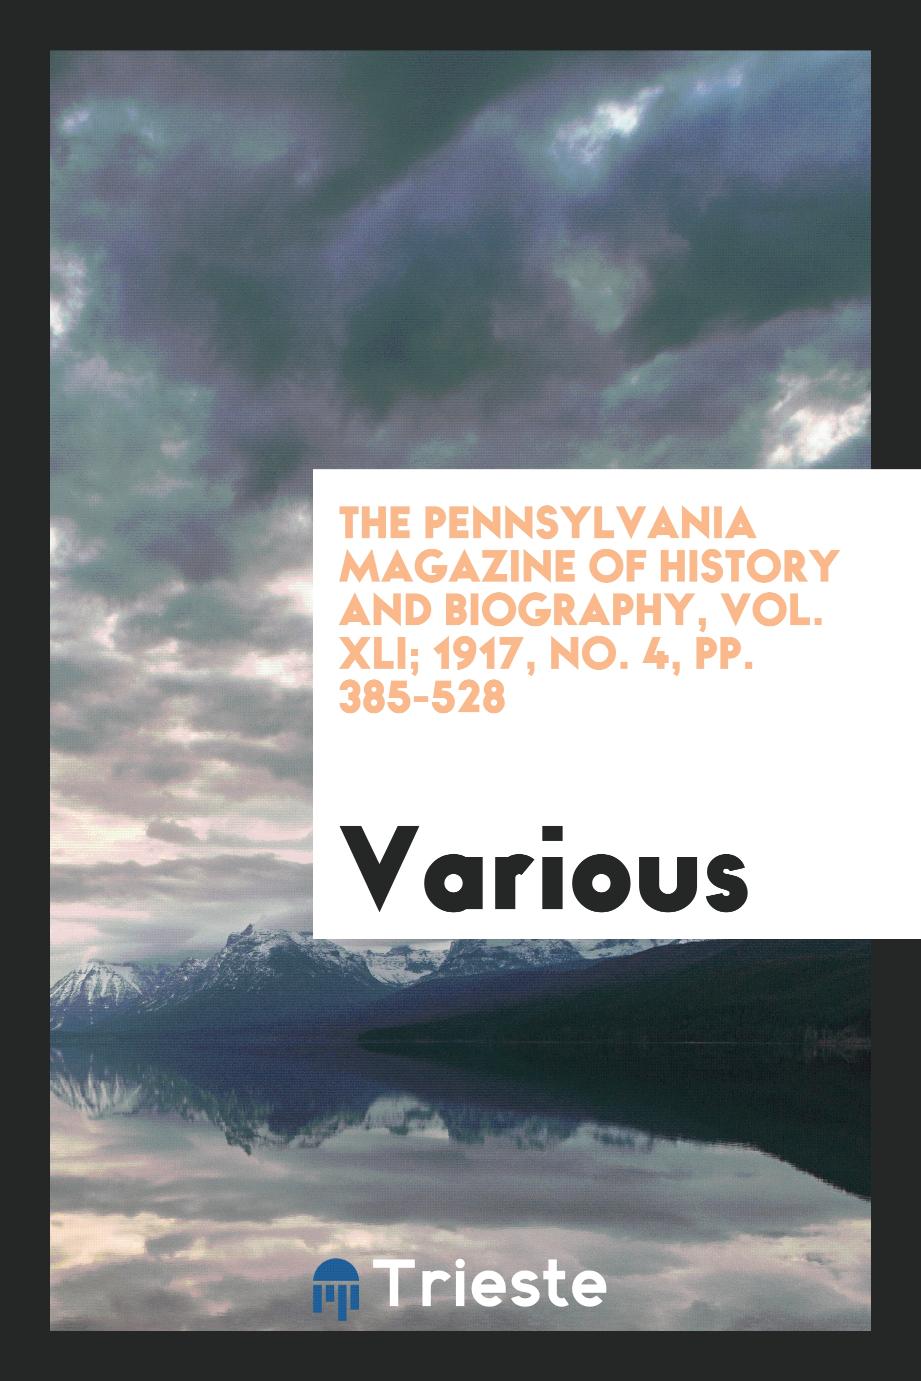 The Pennsylvania Magazine of History and Biography, Vol. XLI; 1917, No. 4, pp. 385-528